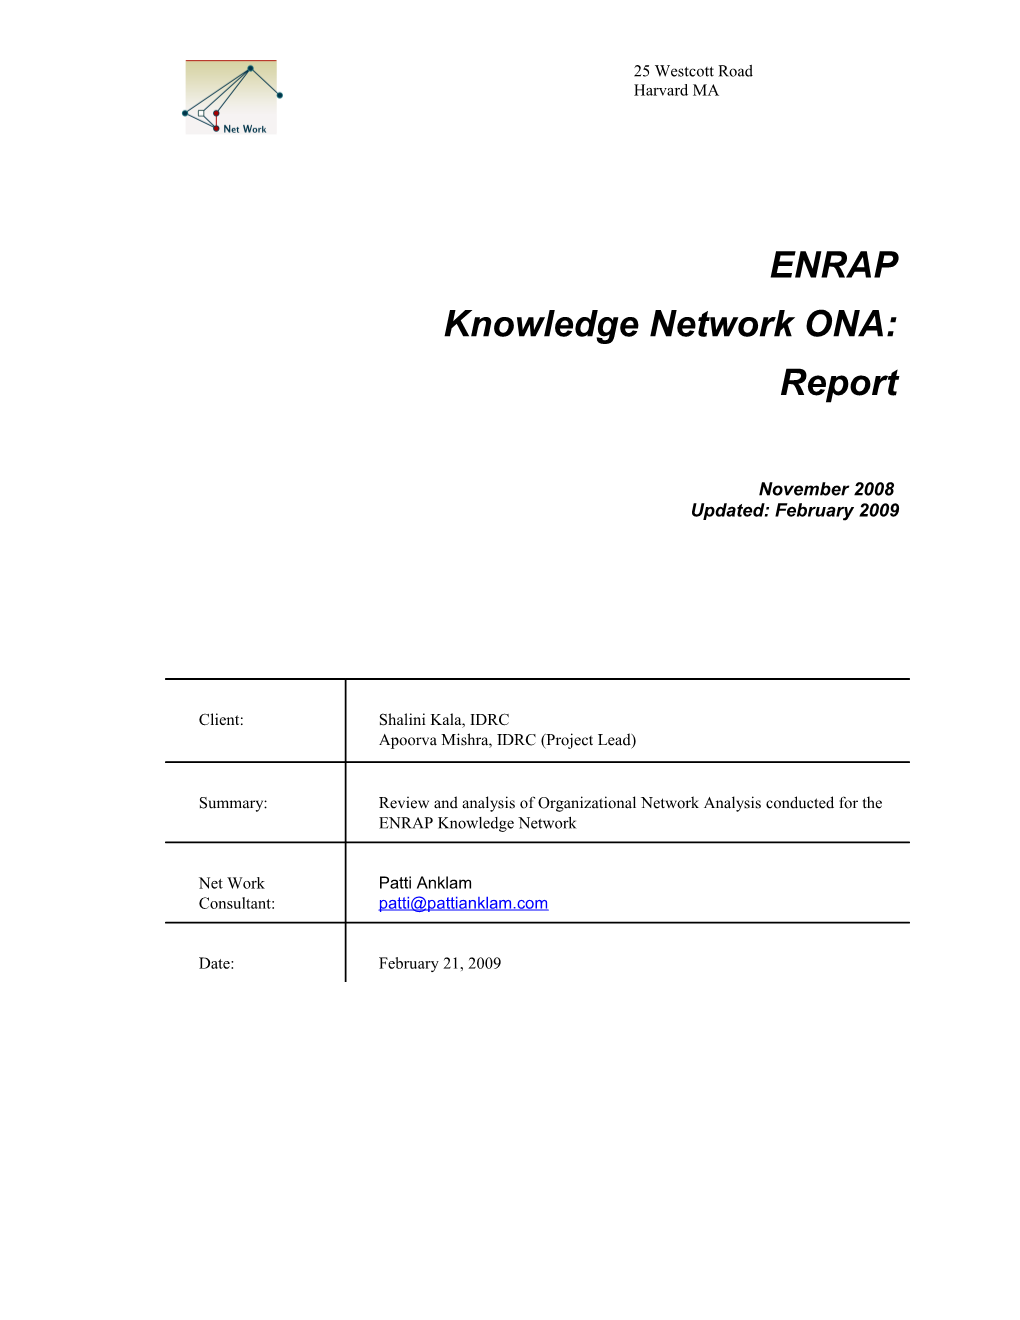 Knowledge Network ONA